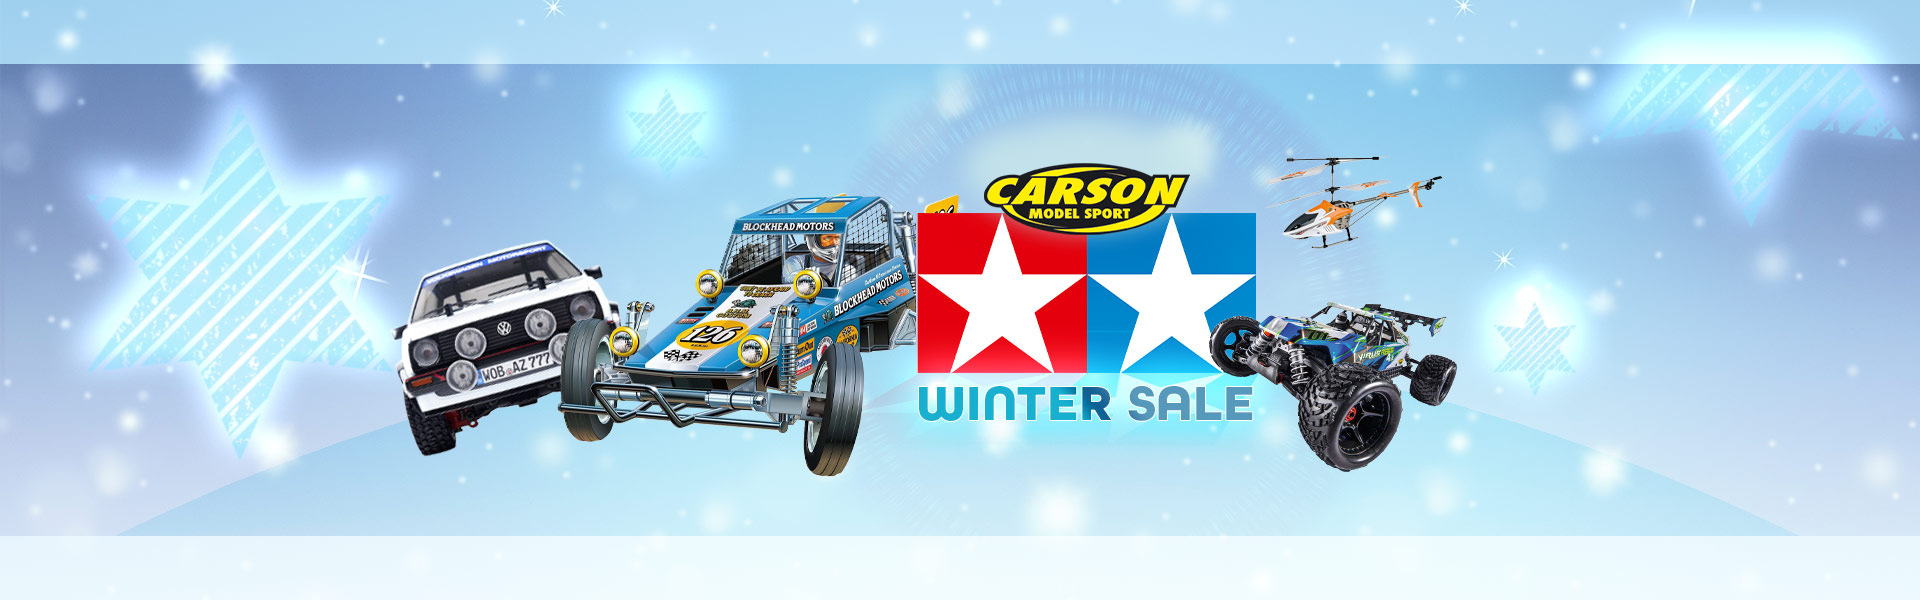 Tamiya RC Carson Winter Sale